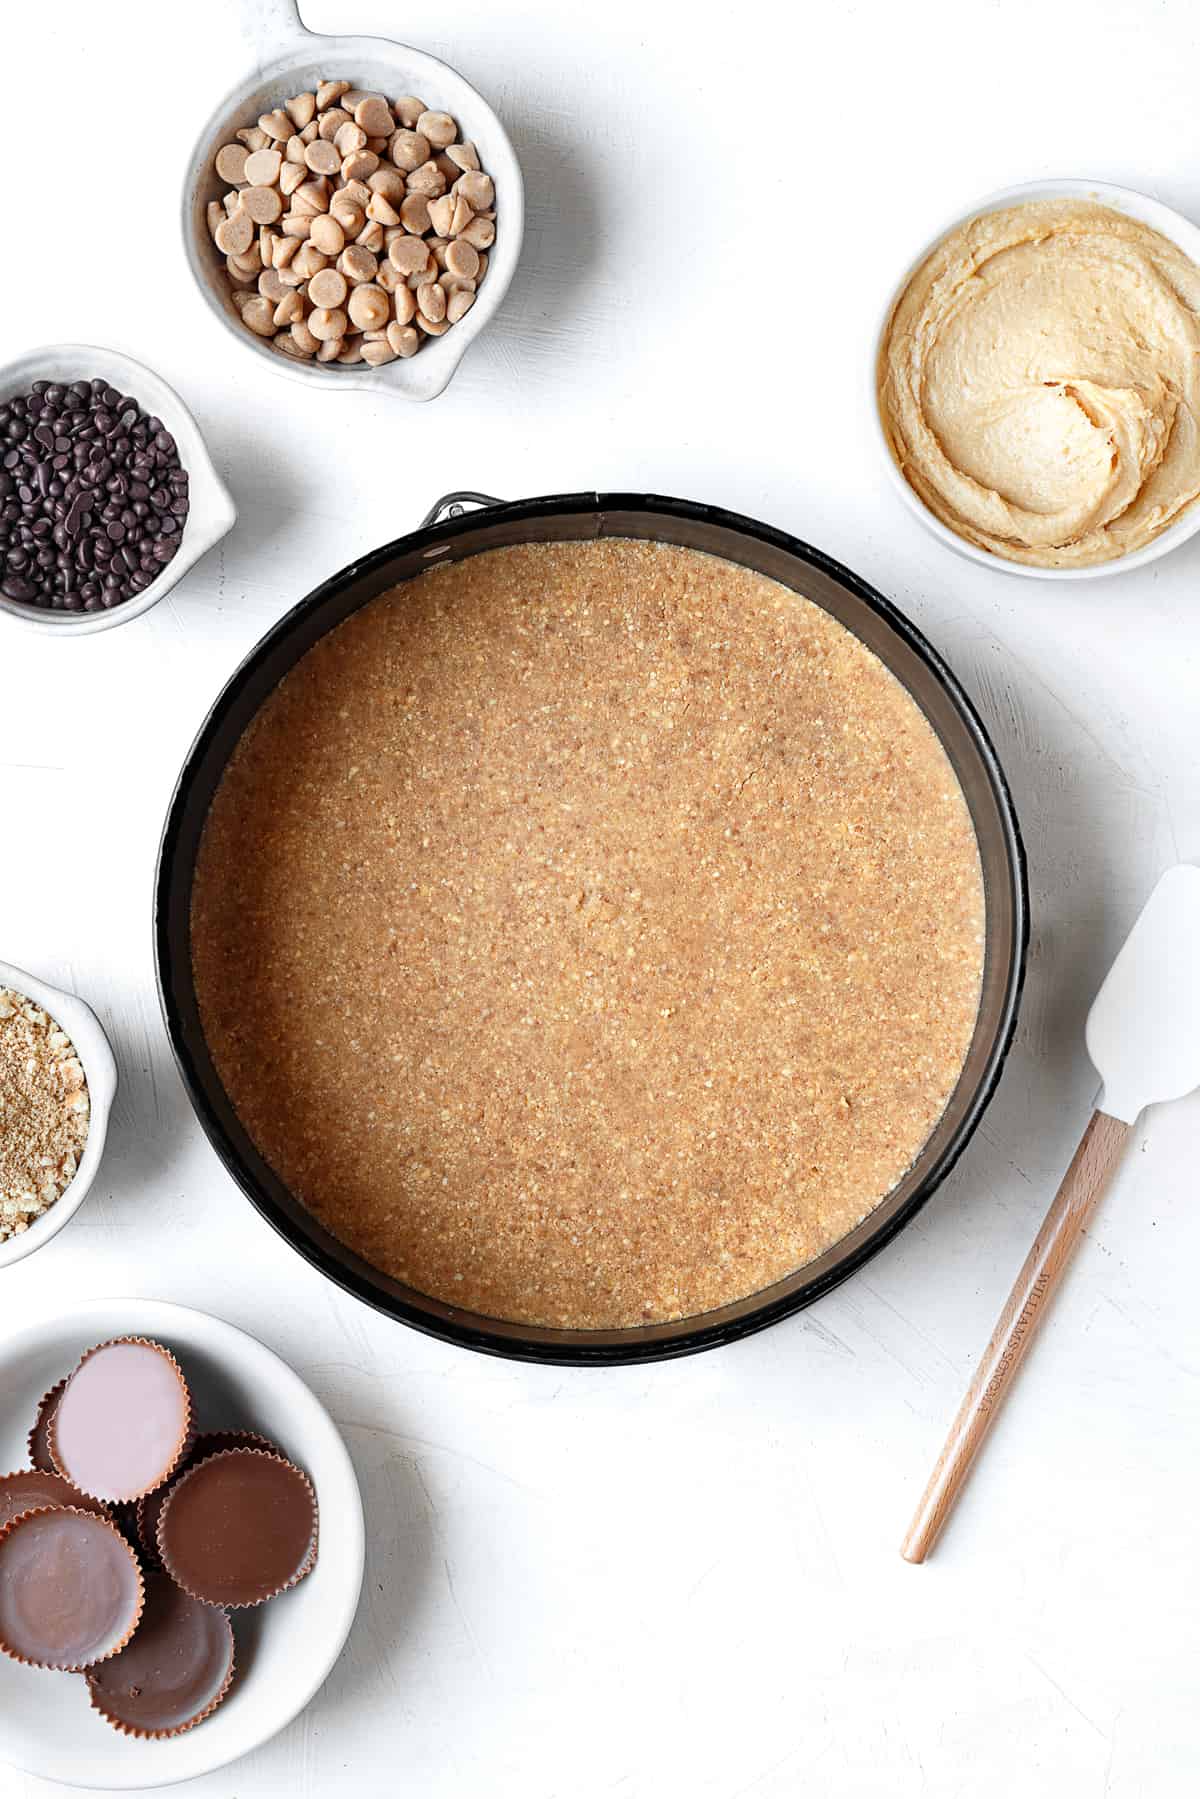 no-bake chocolate peanut butter pie crust in a pie pan